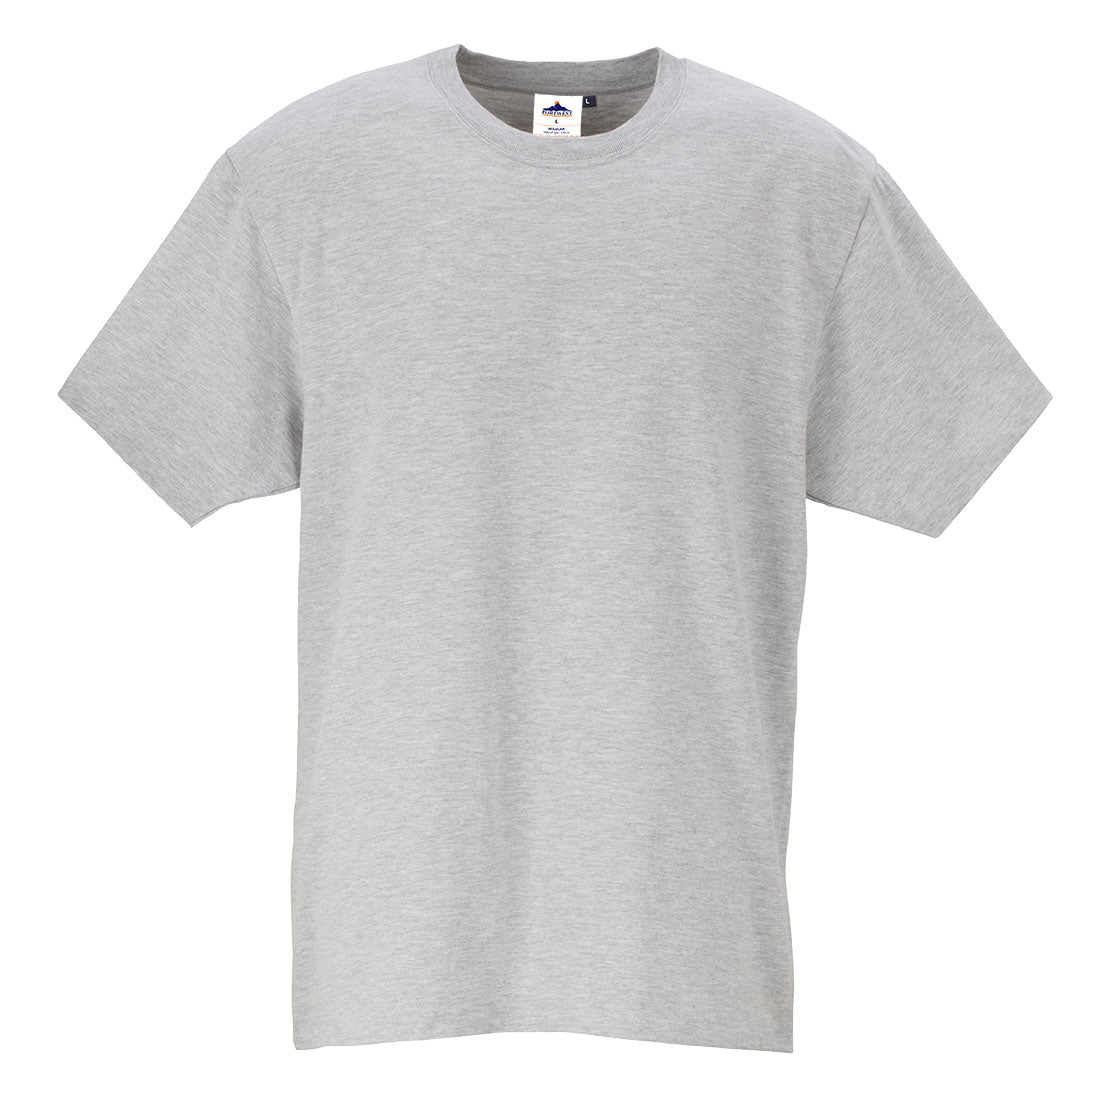 Turin Premium T-Shirt Grey - B195 Front